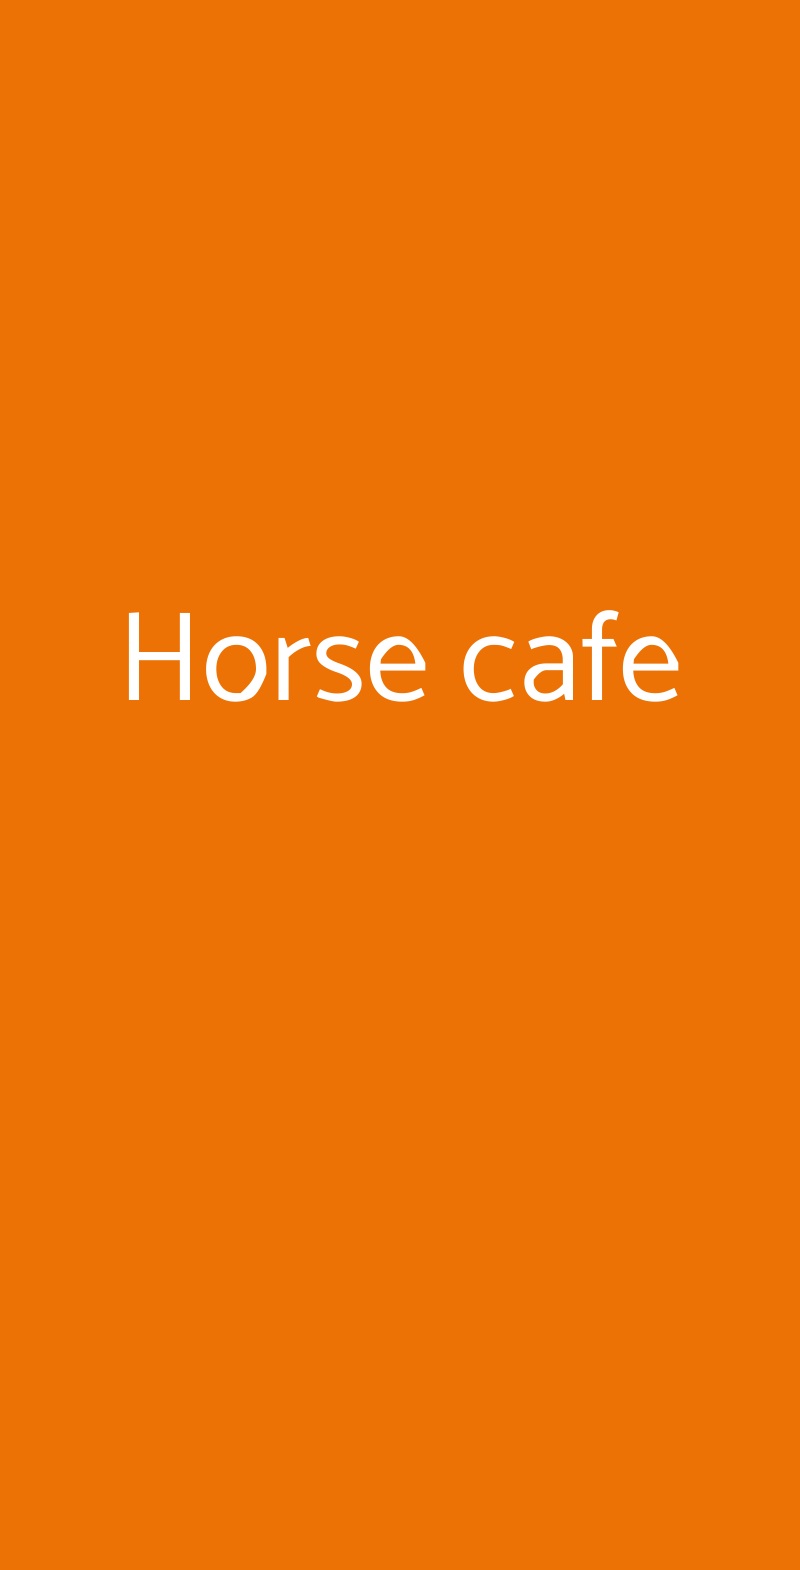 Horse cafe Milano menù 1 pagina